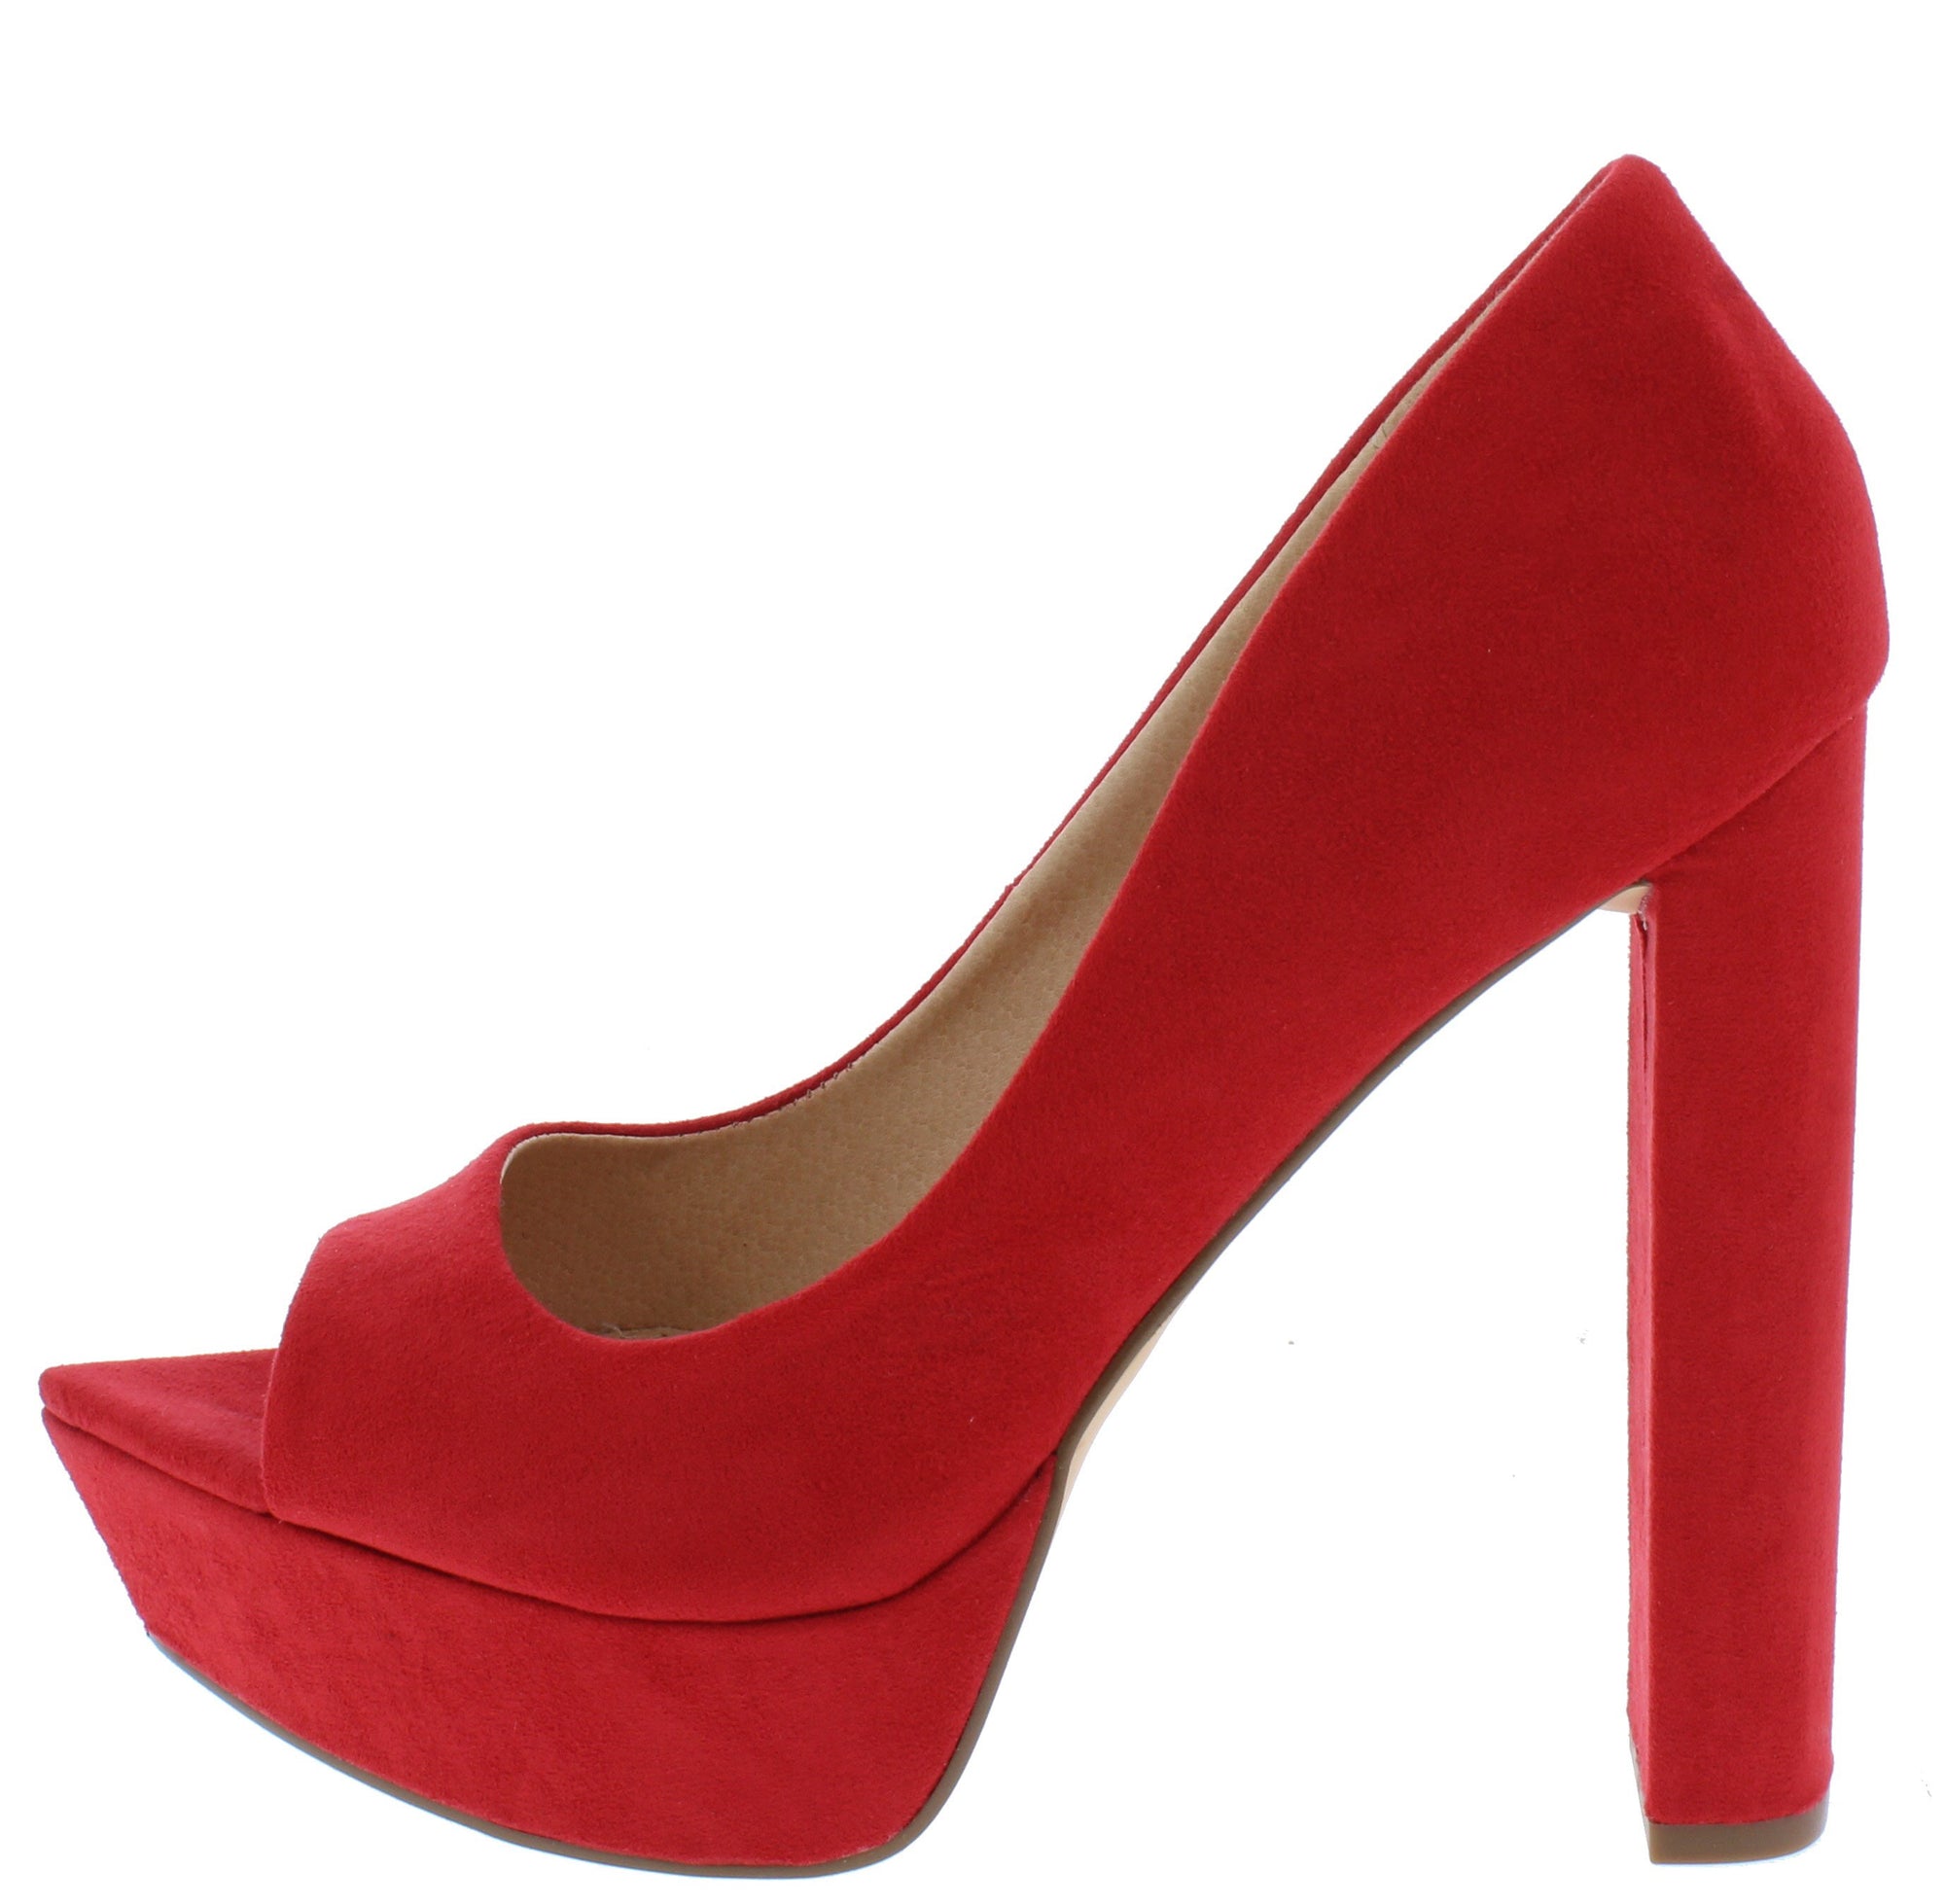 red suede pointed heels